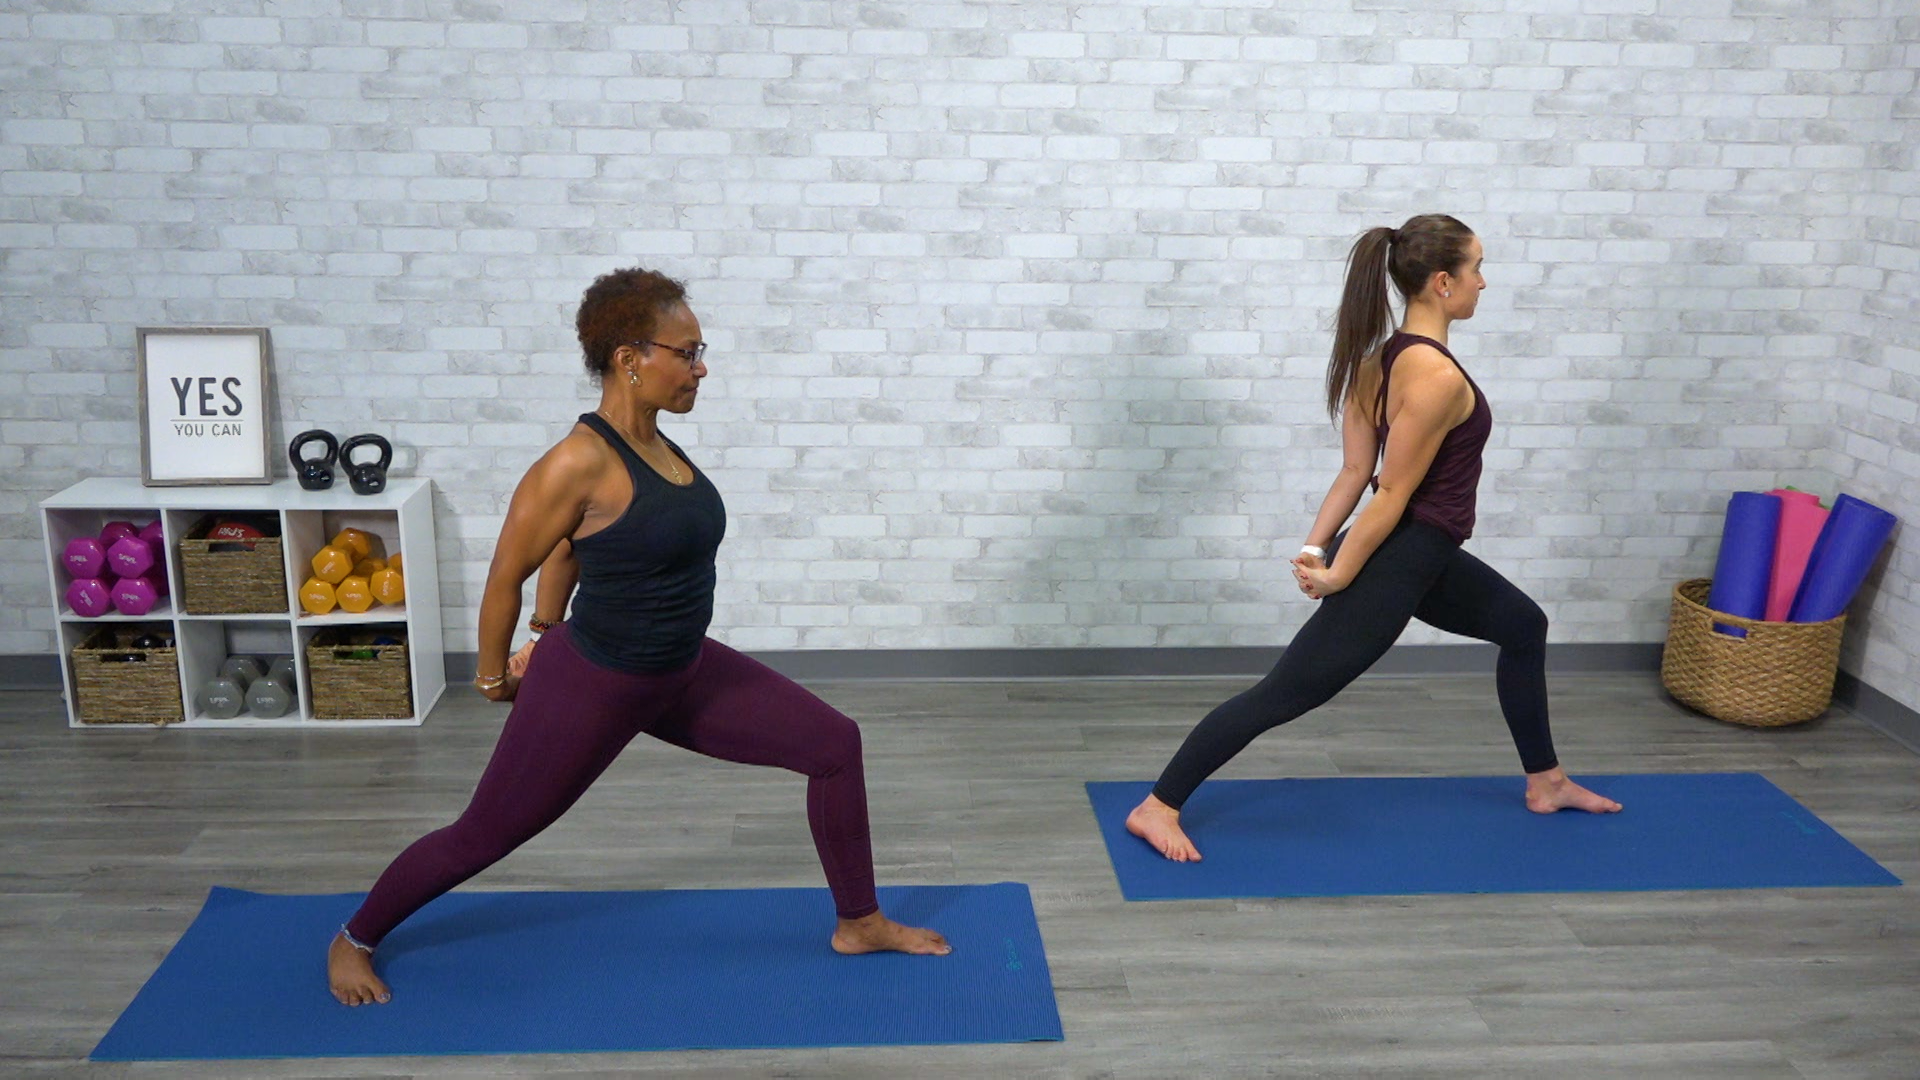 Two women doing yoga on blue mats